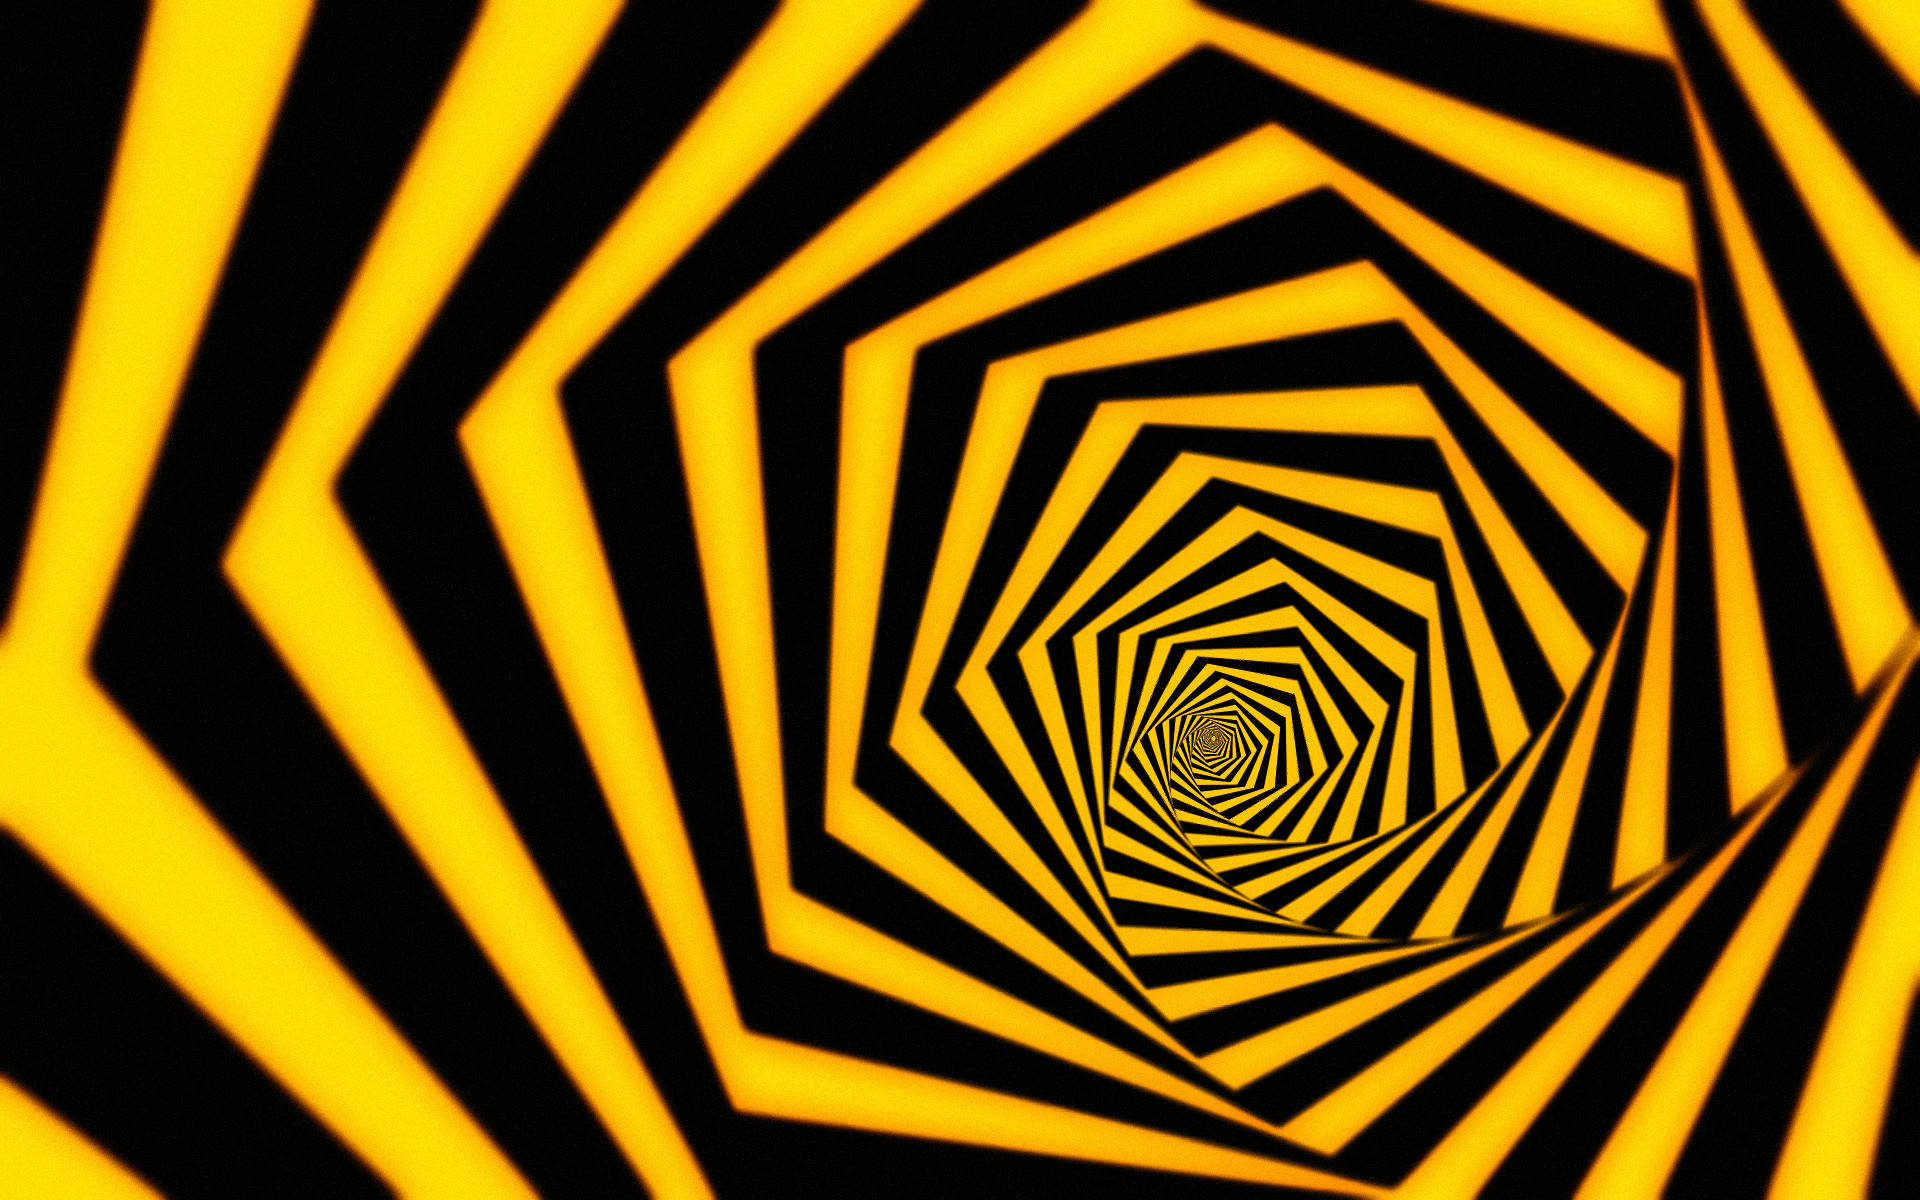 Hexagon-like Hypnosis Patterns